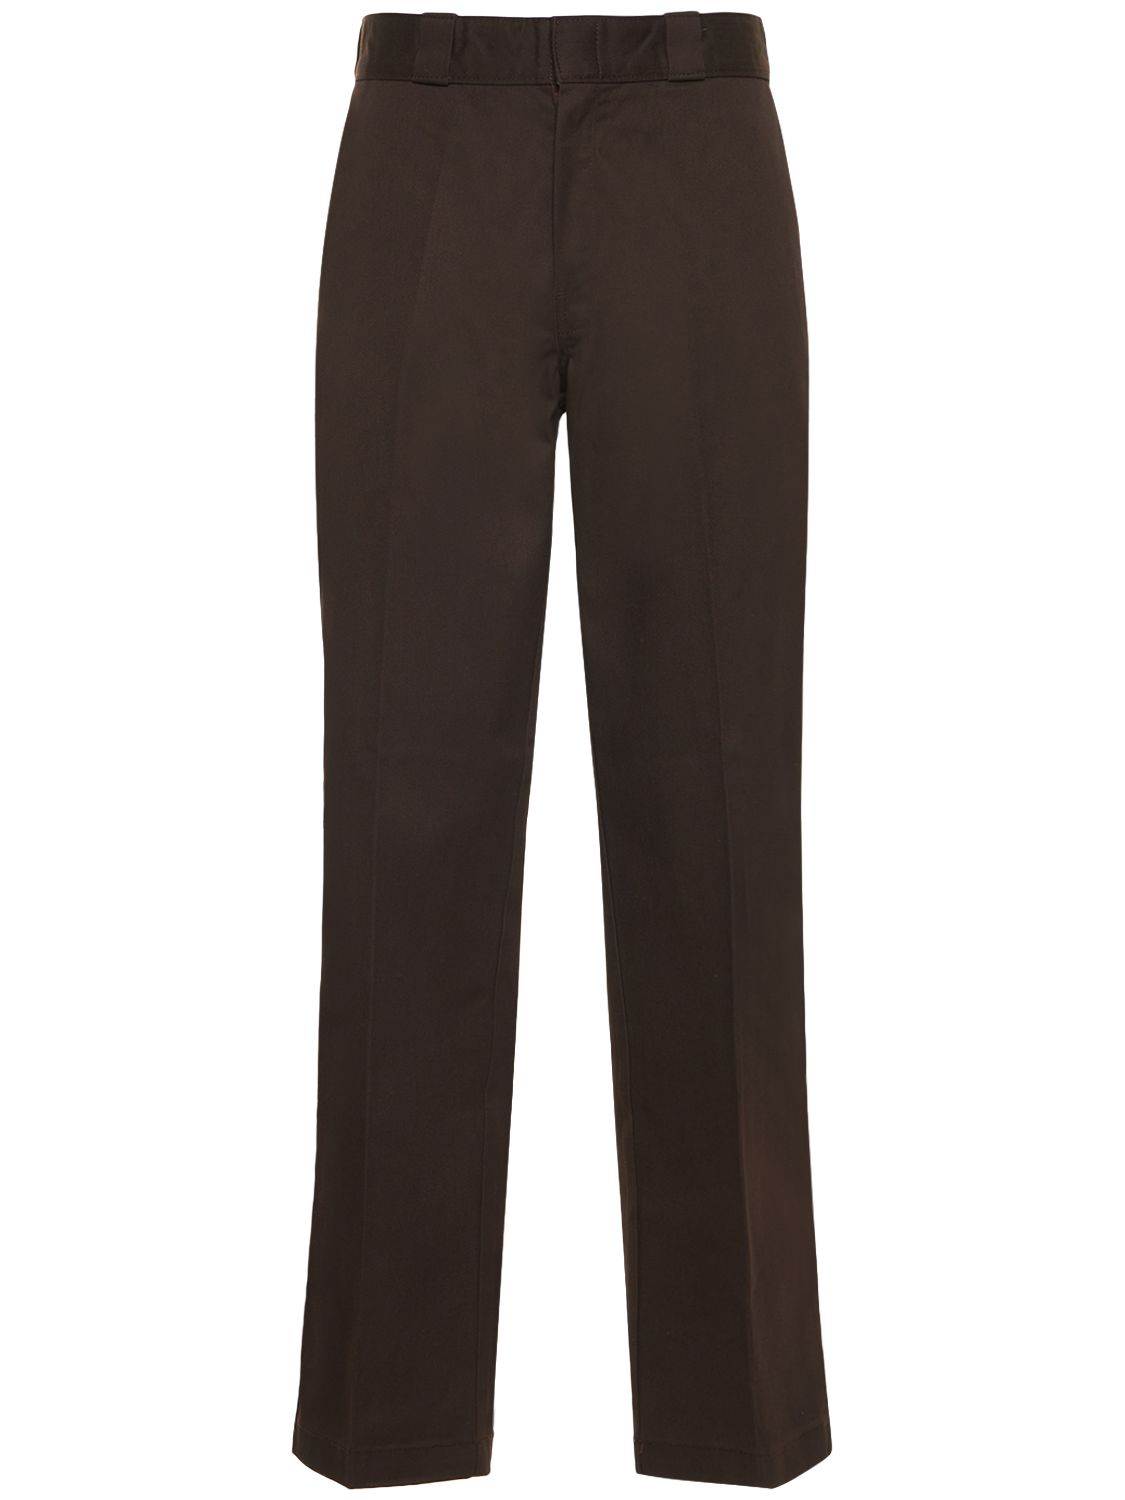 Dickies 874 work trousers in brown straight fit